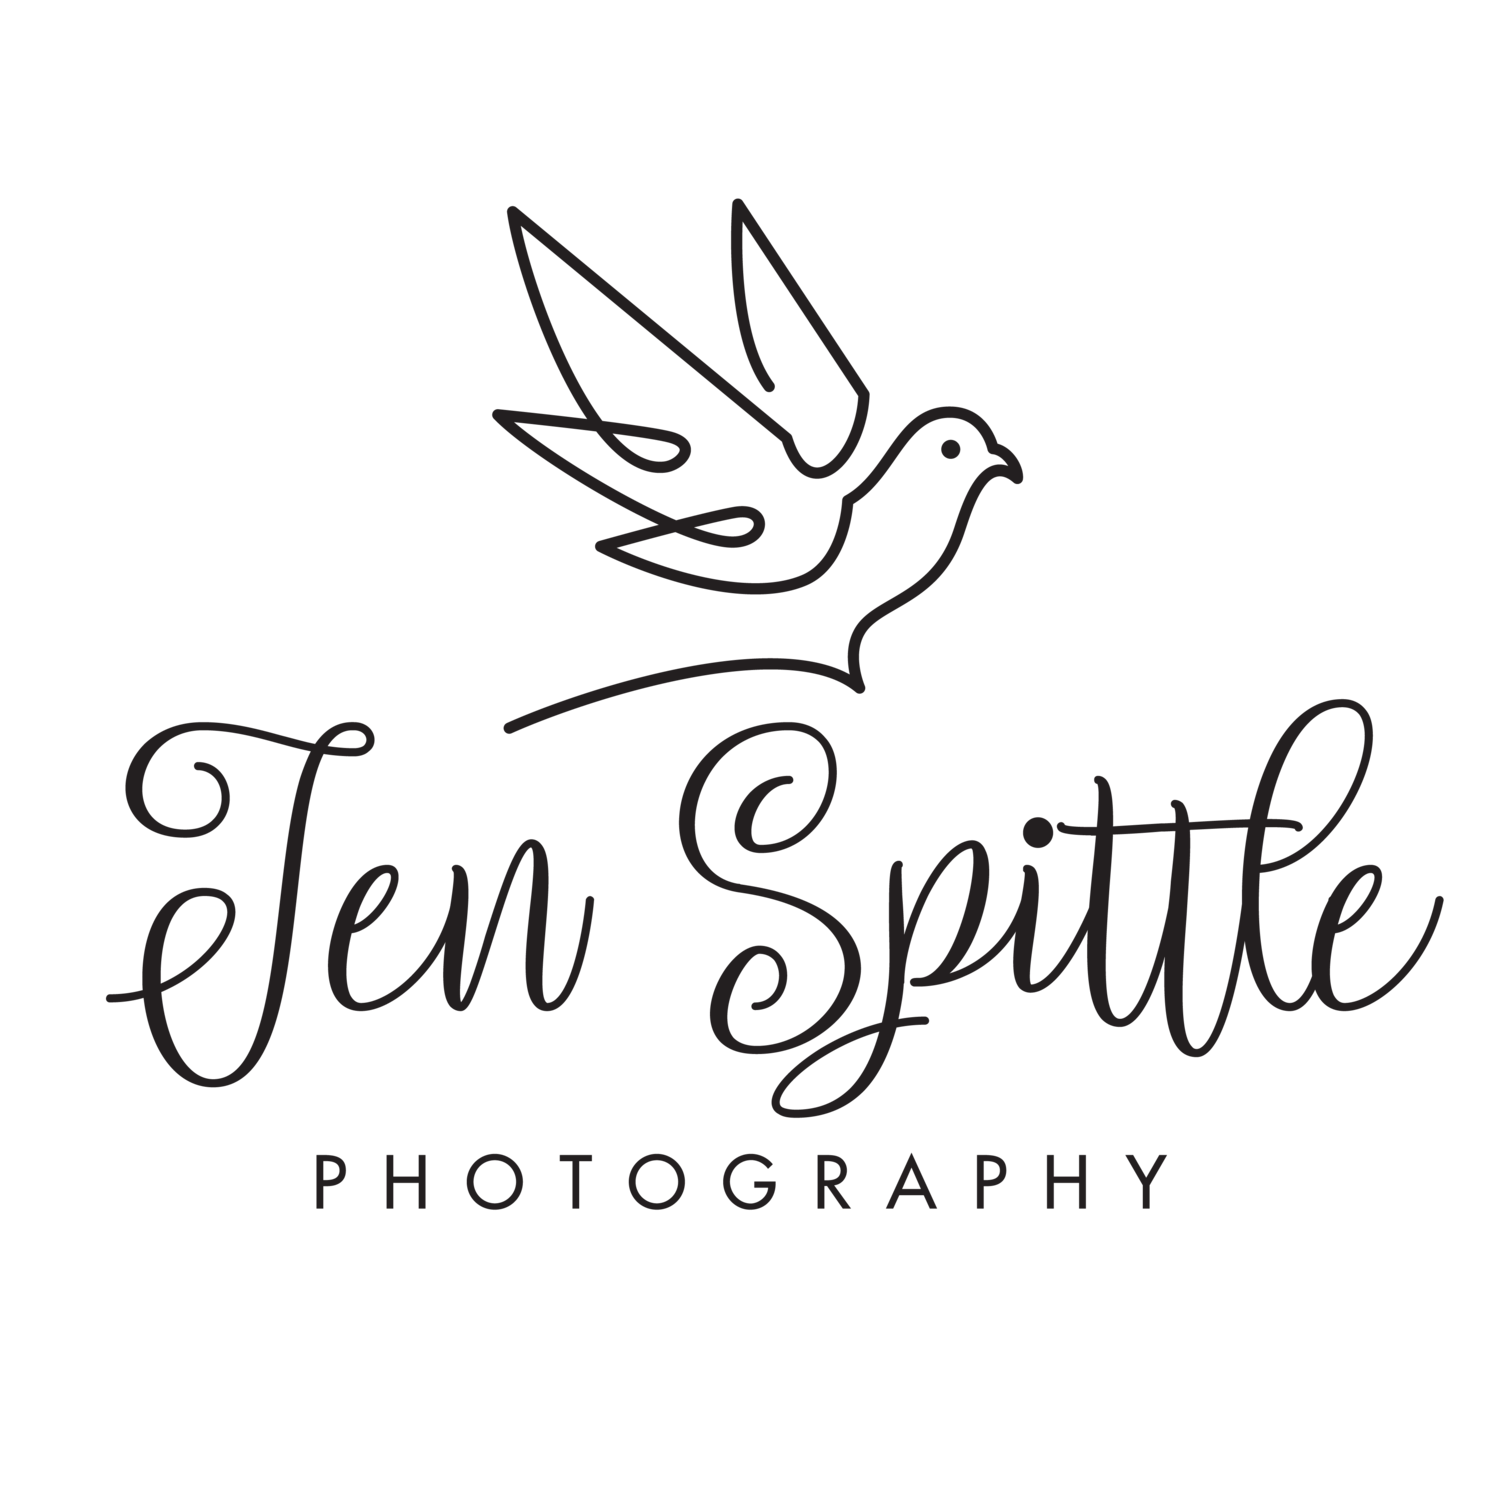 Jen Spittle Photography